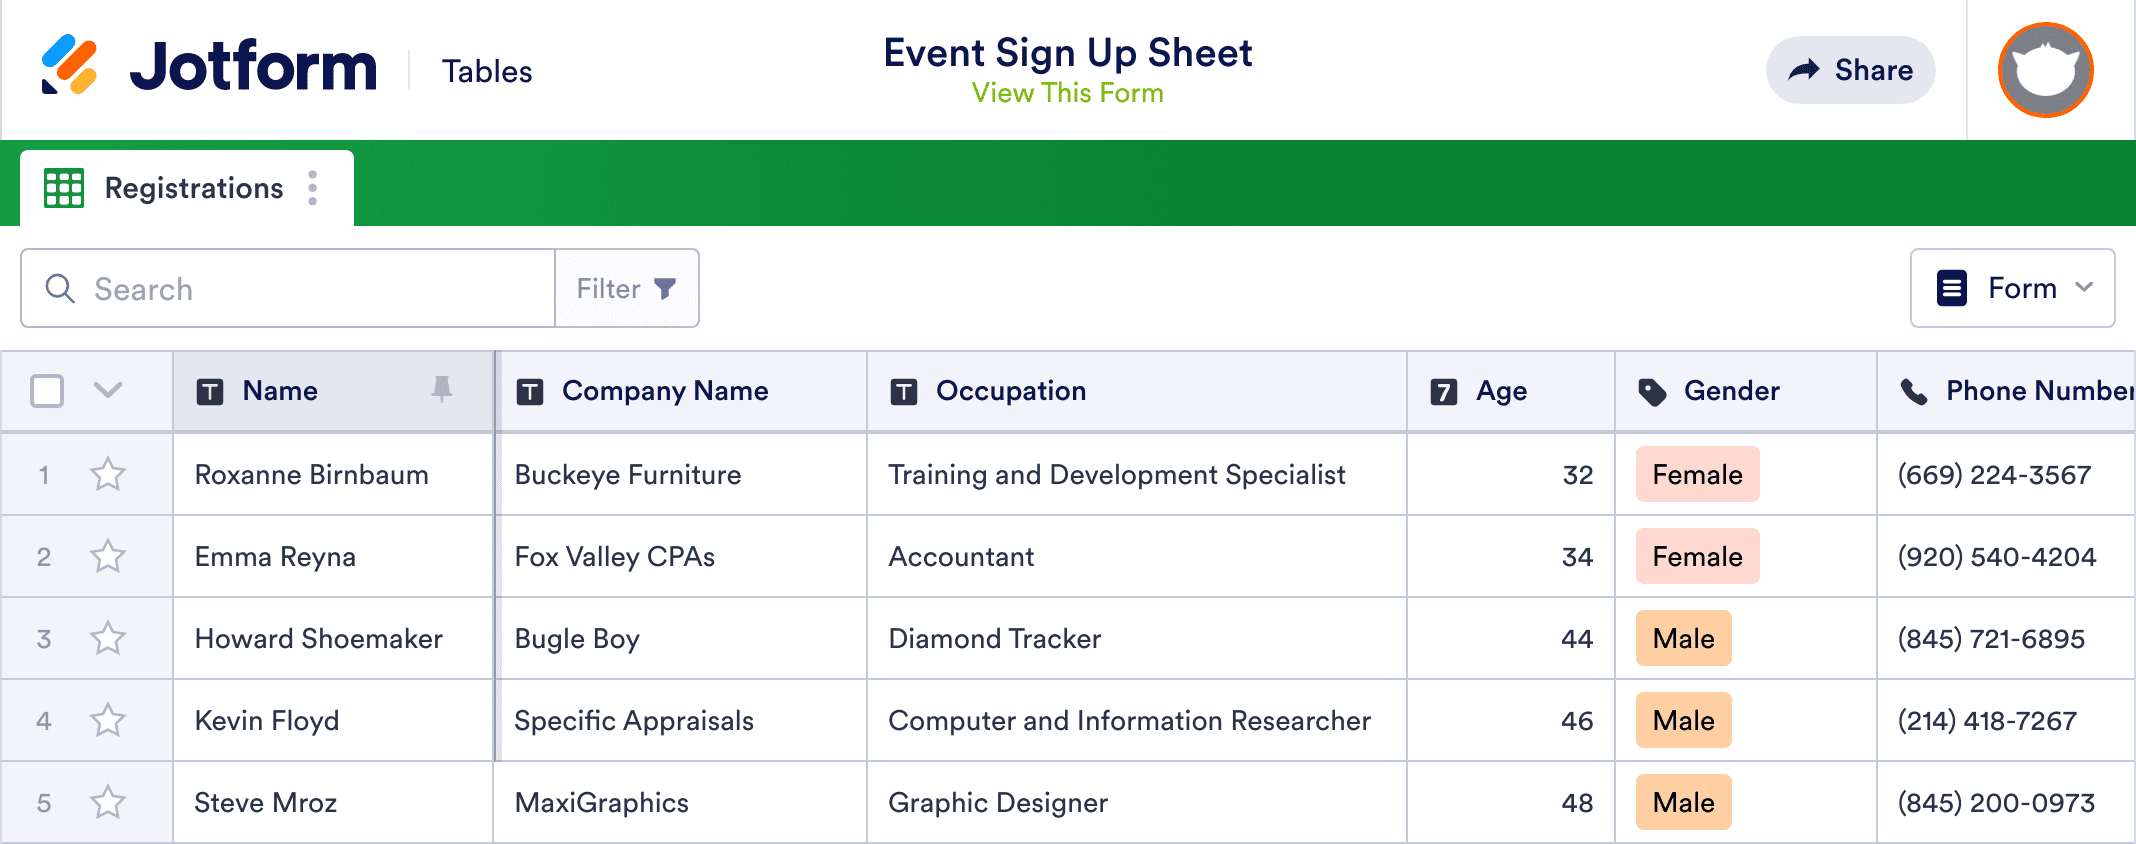 Event Sign Up Sheet